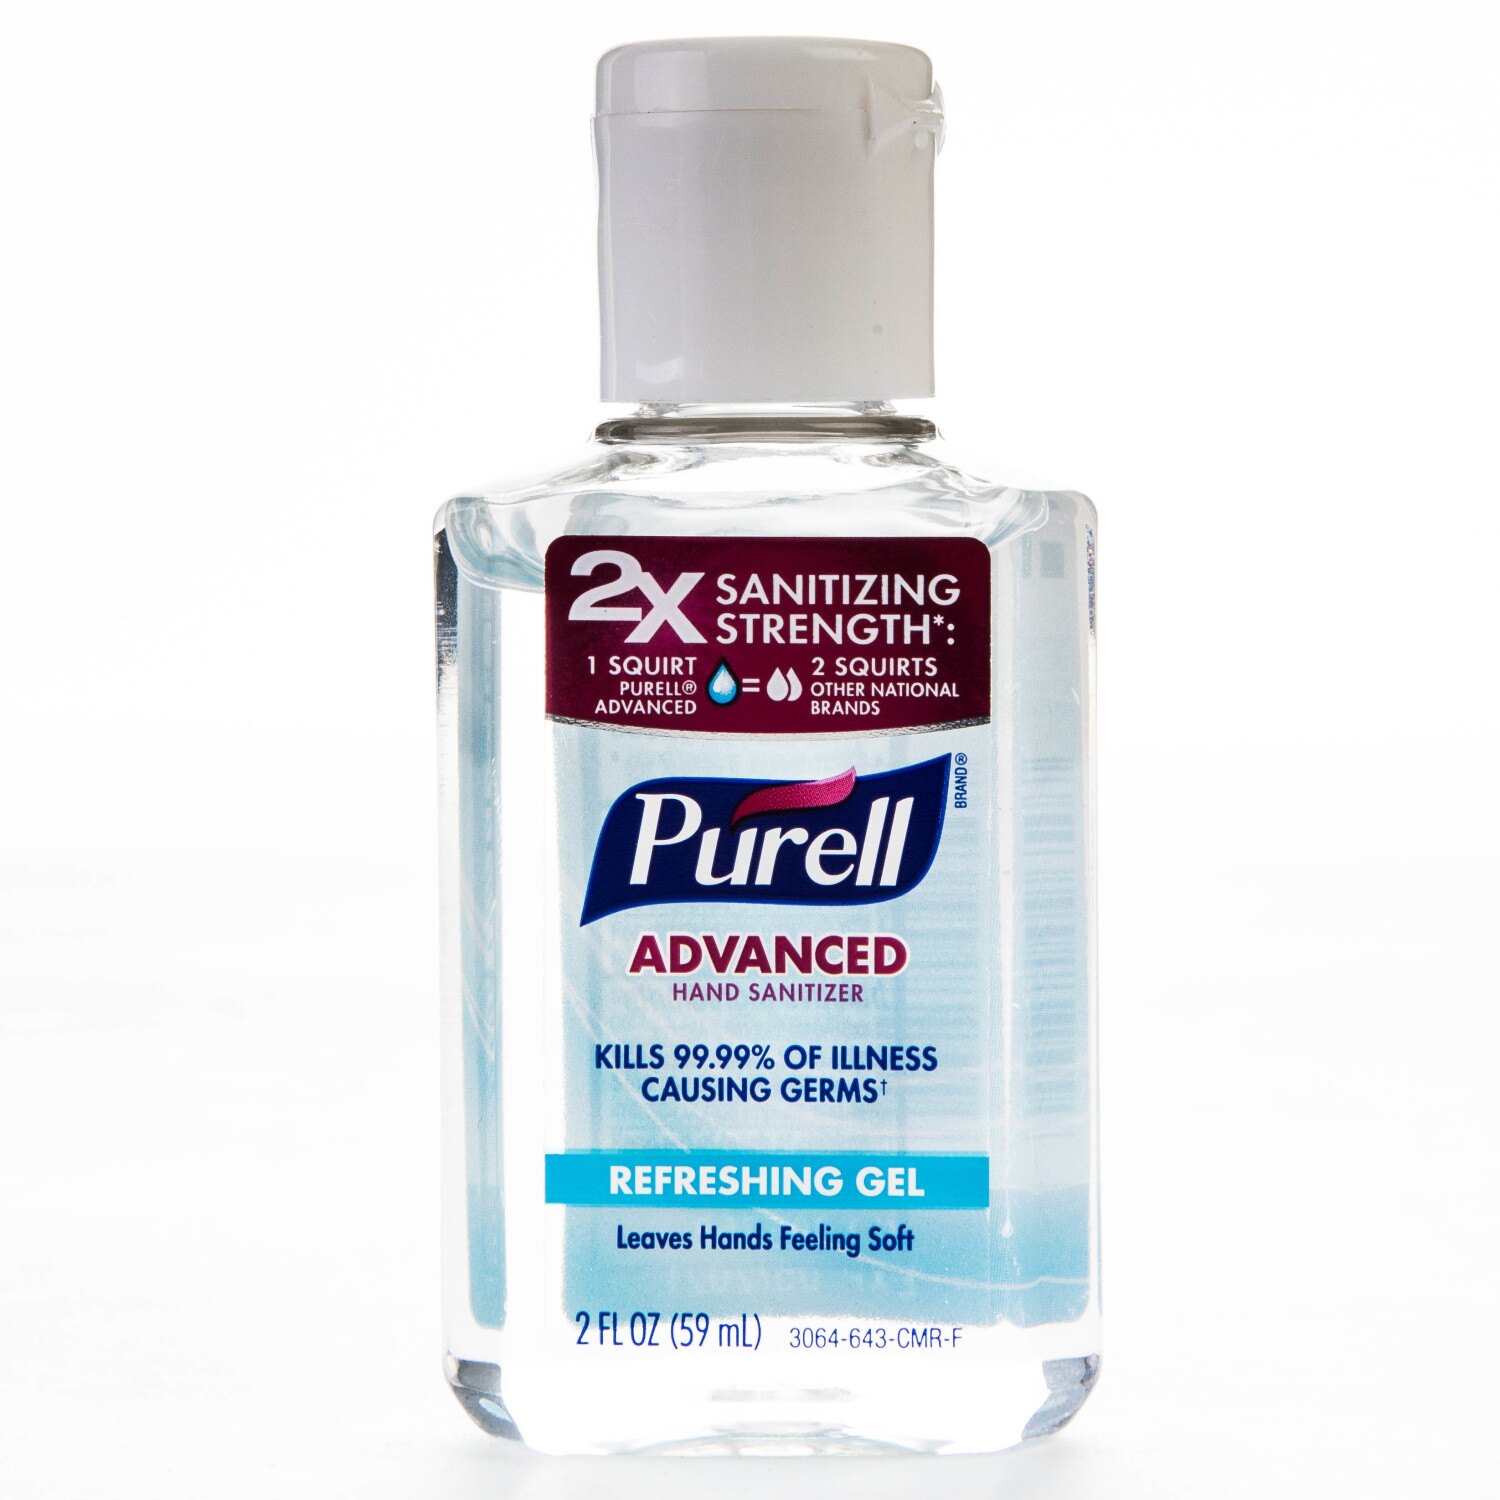 Purell Original Hand Sanitizer Refreshing Gel